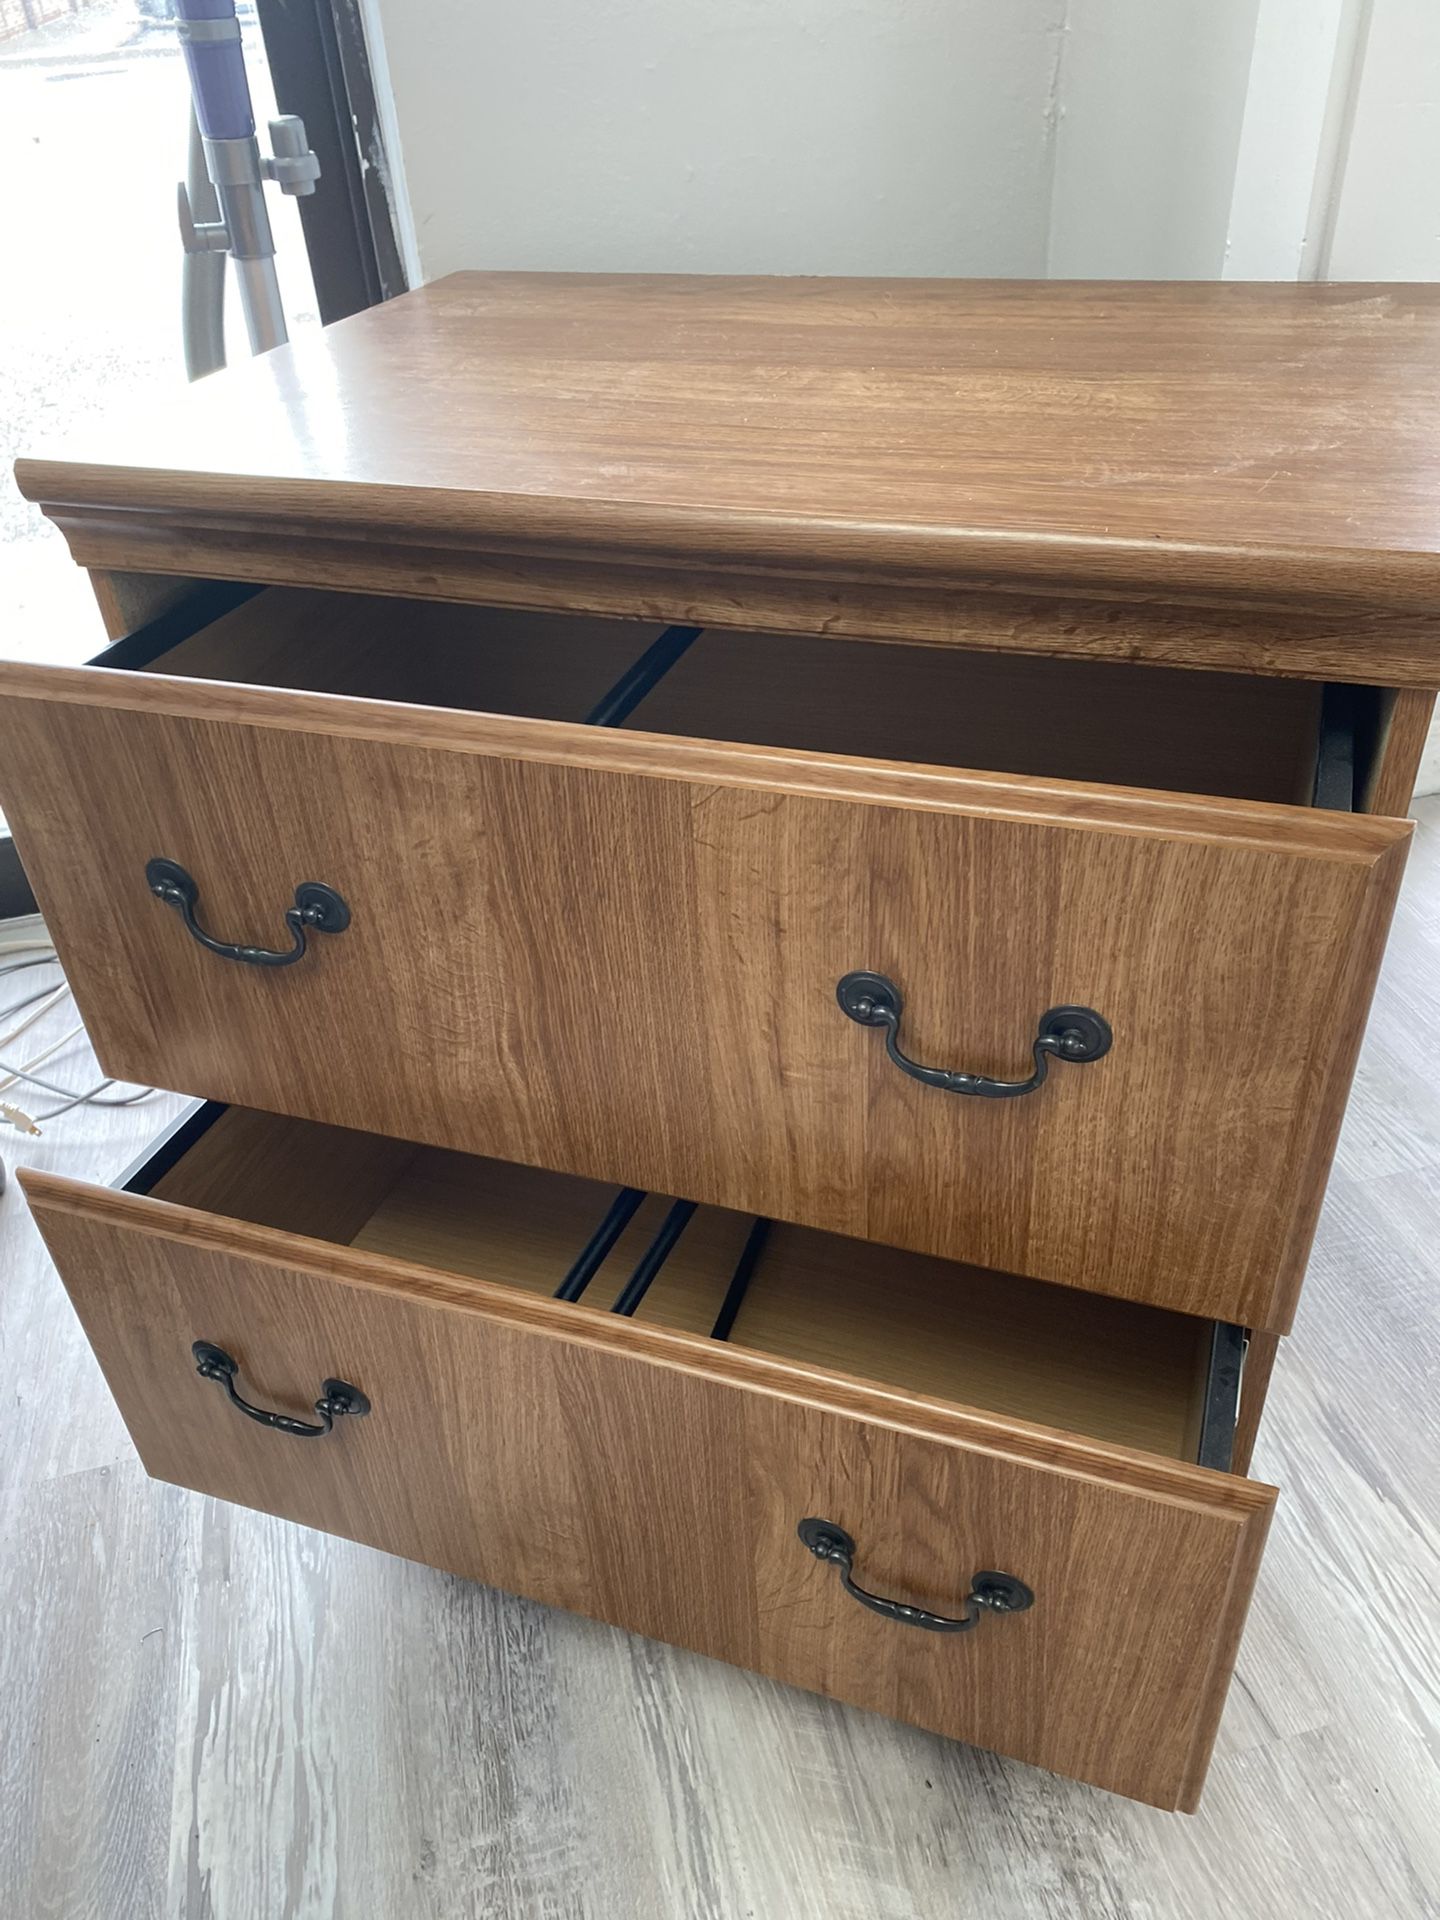  Very Nice File Cabinet Wood